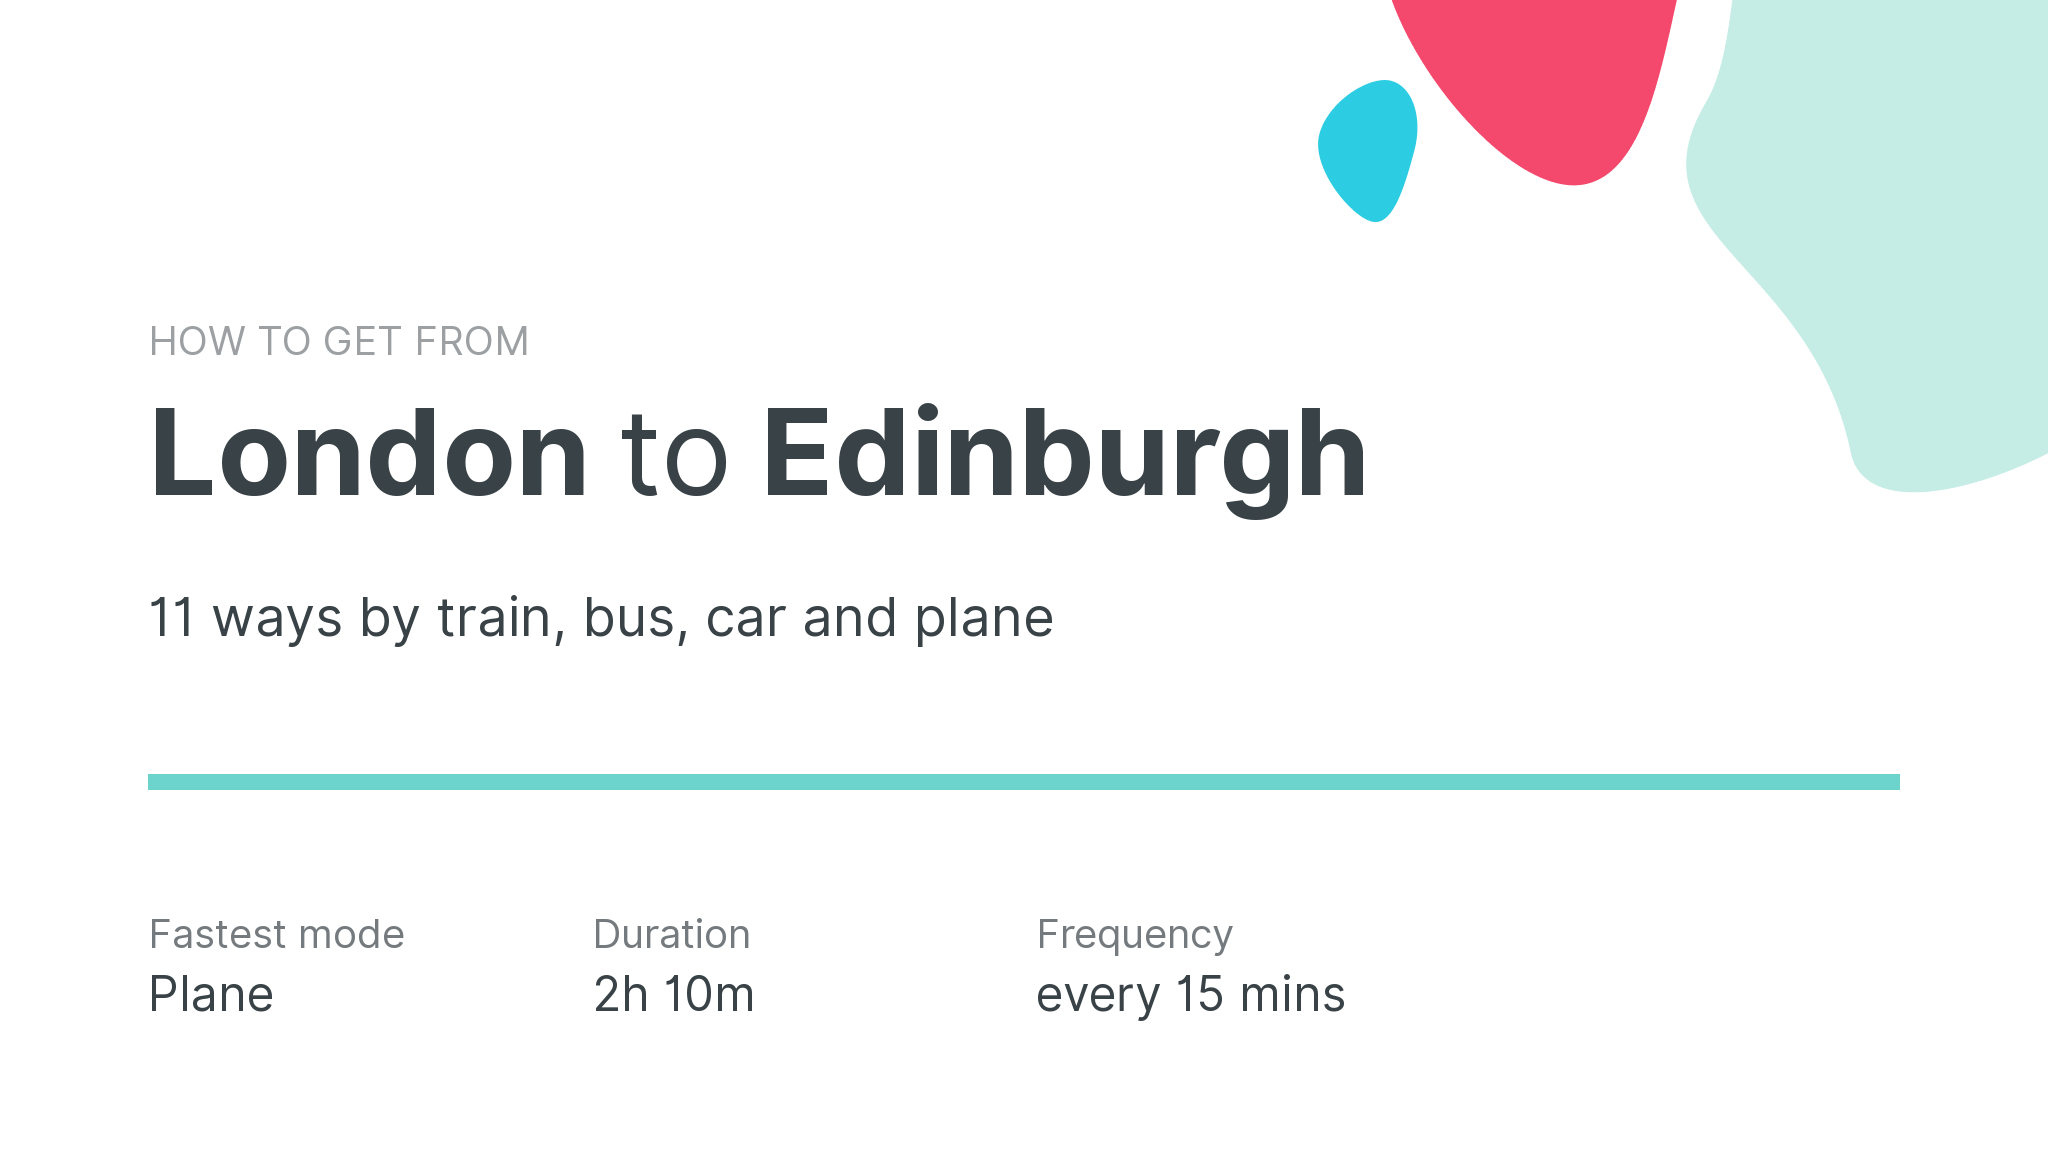 How do I get from London to Edinburgh